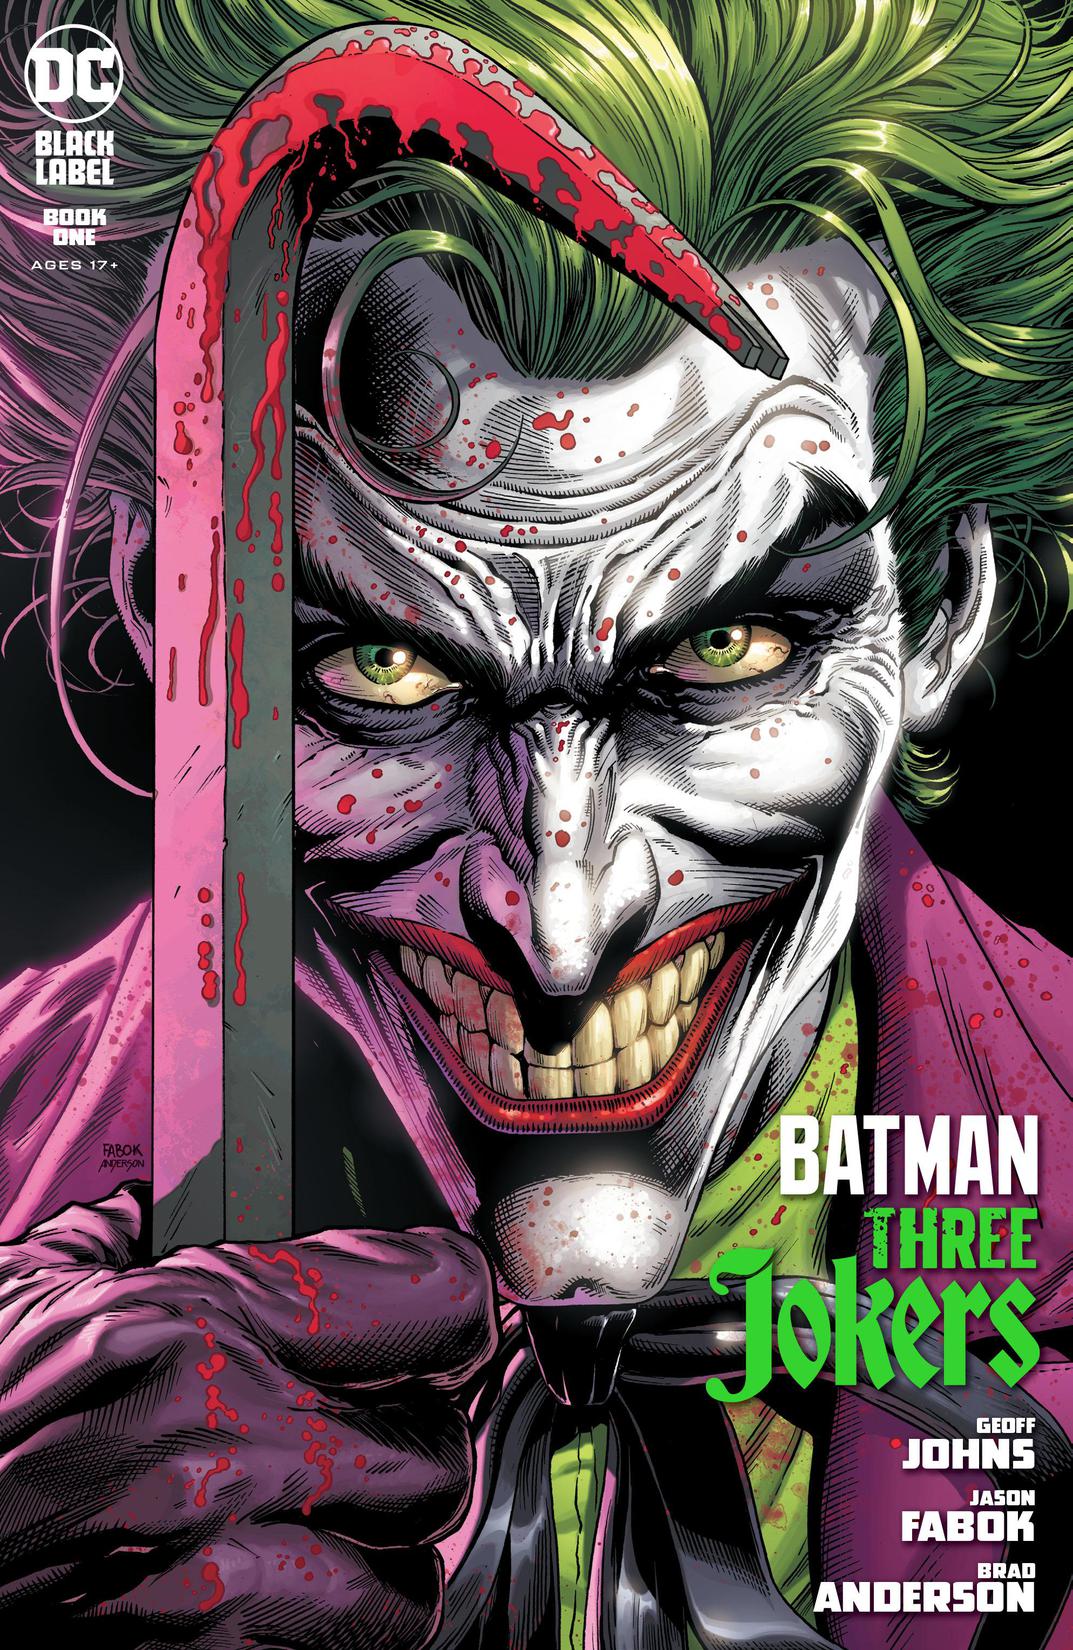 Batman: Three Jokers #1 preview images